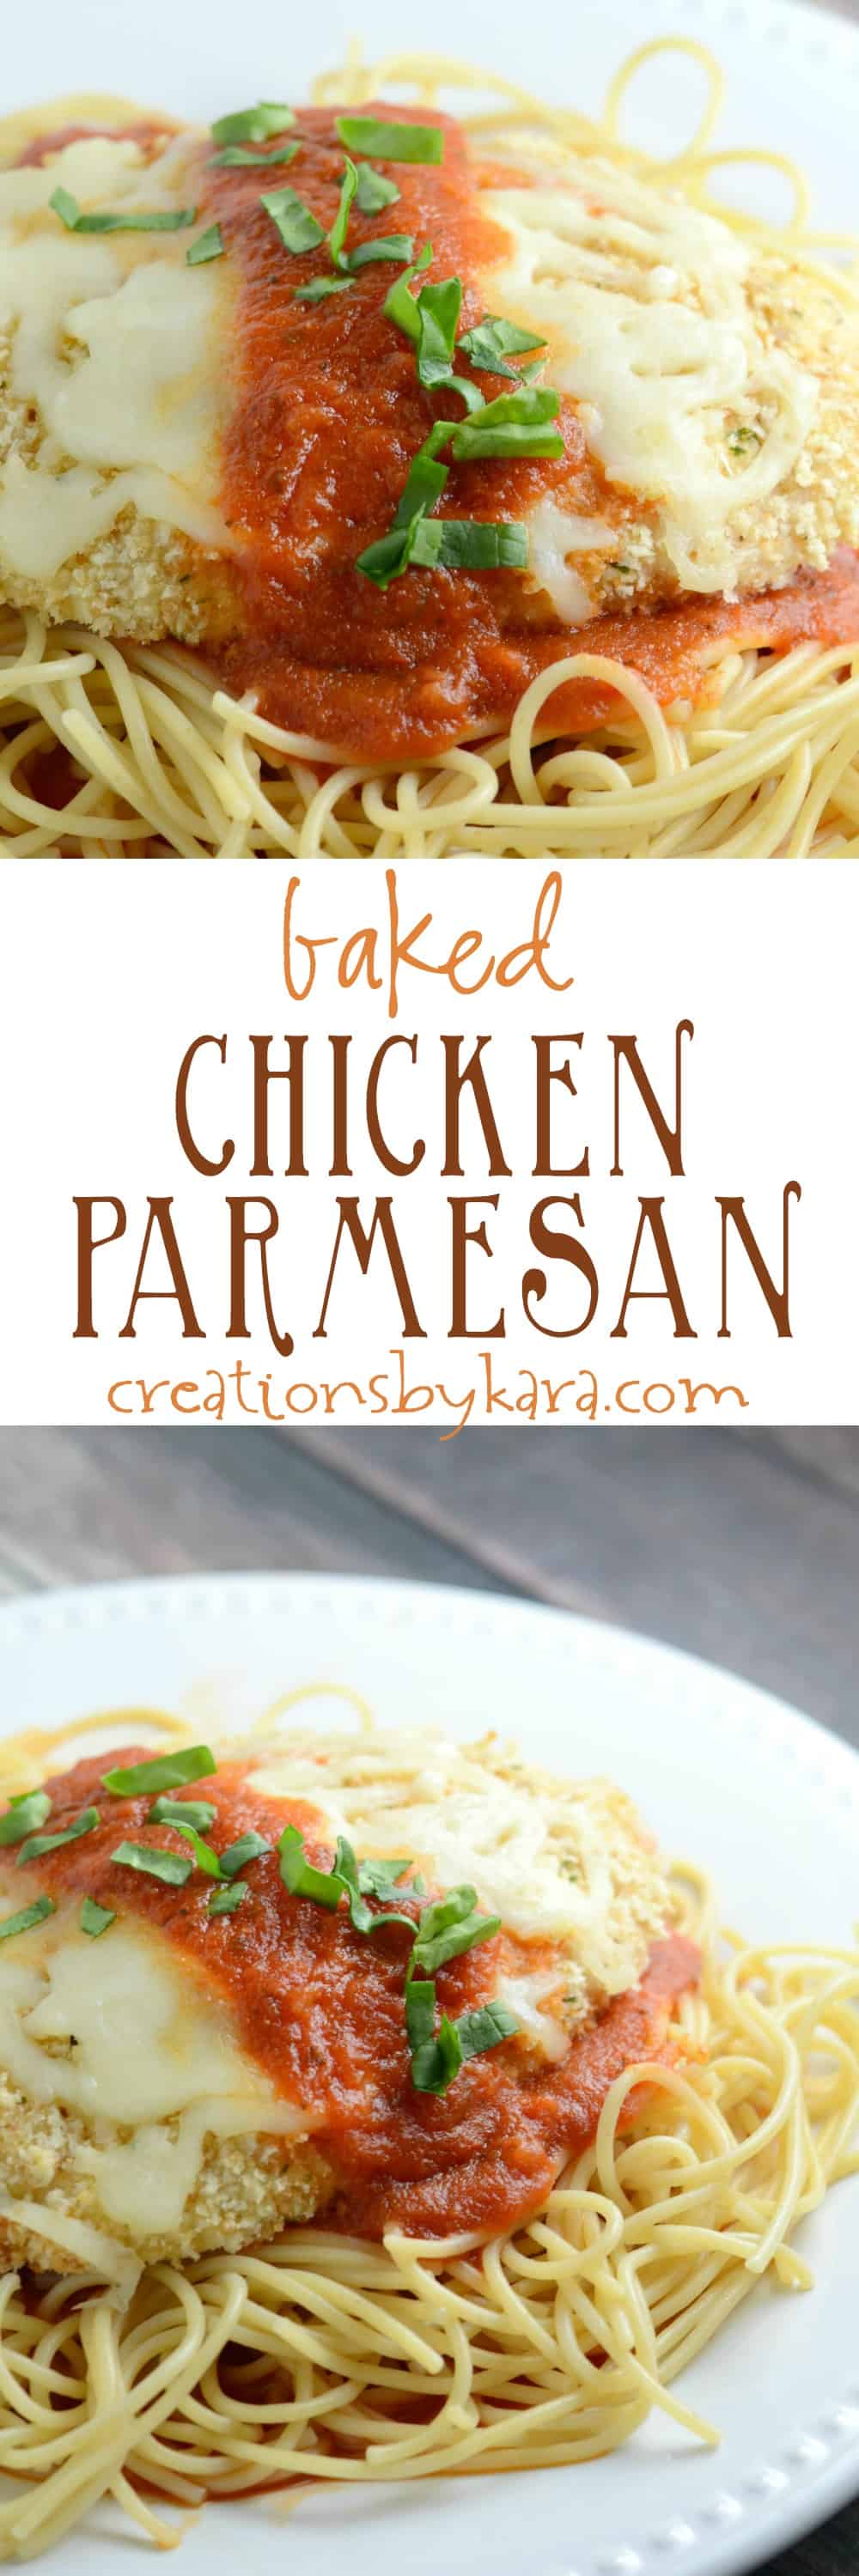 Baked Chicken Parmesan Recipe - Creations by Kara